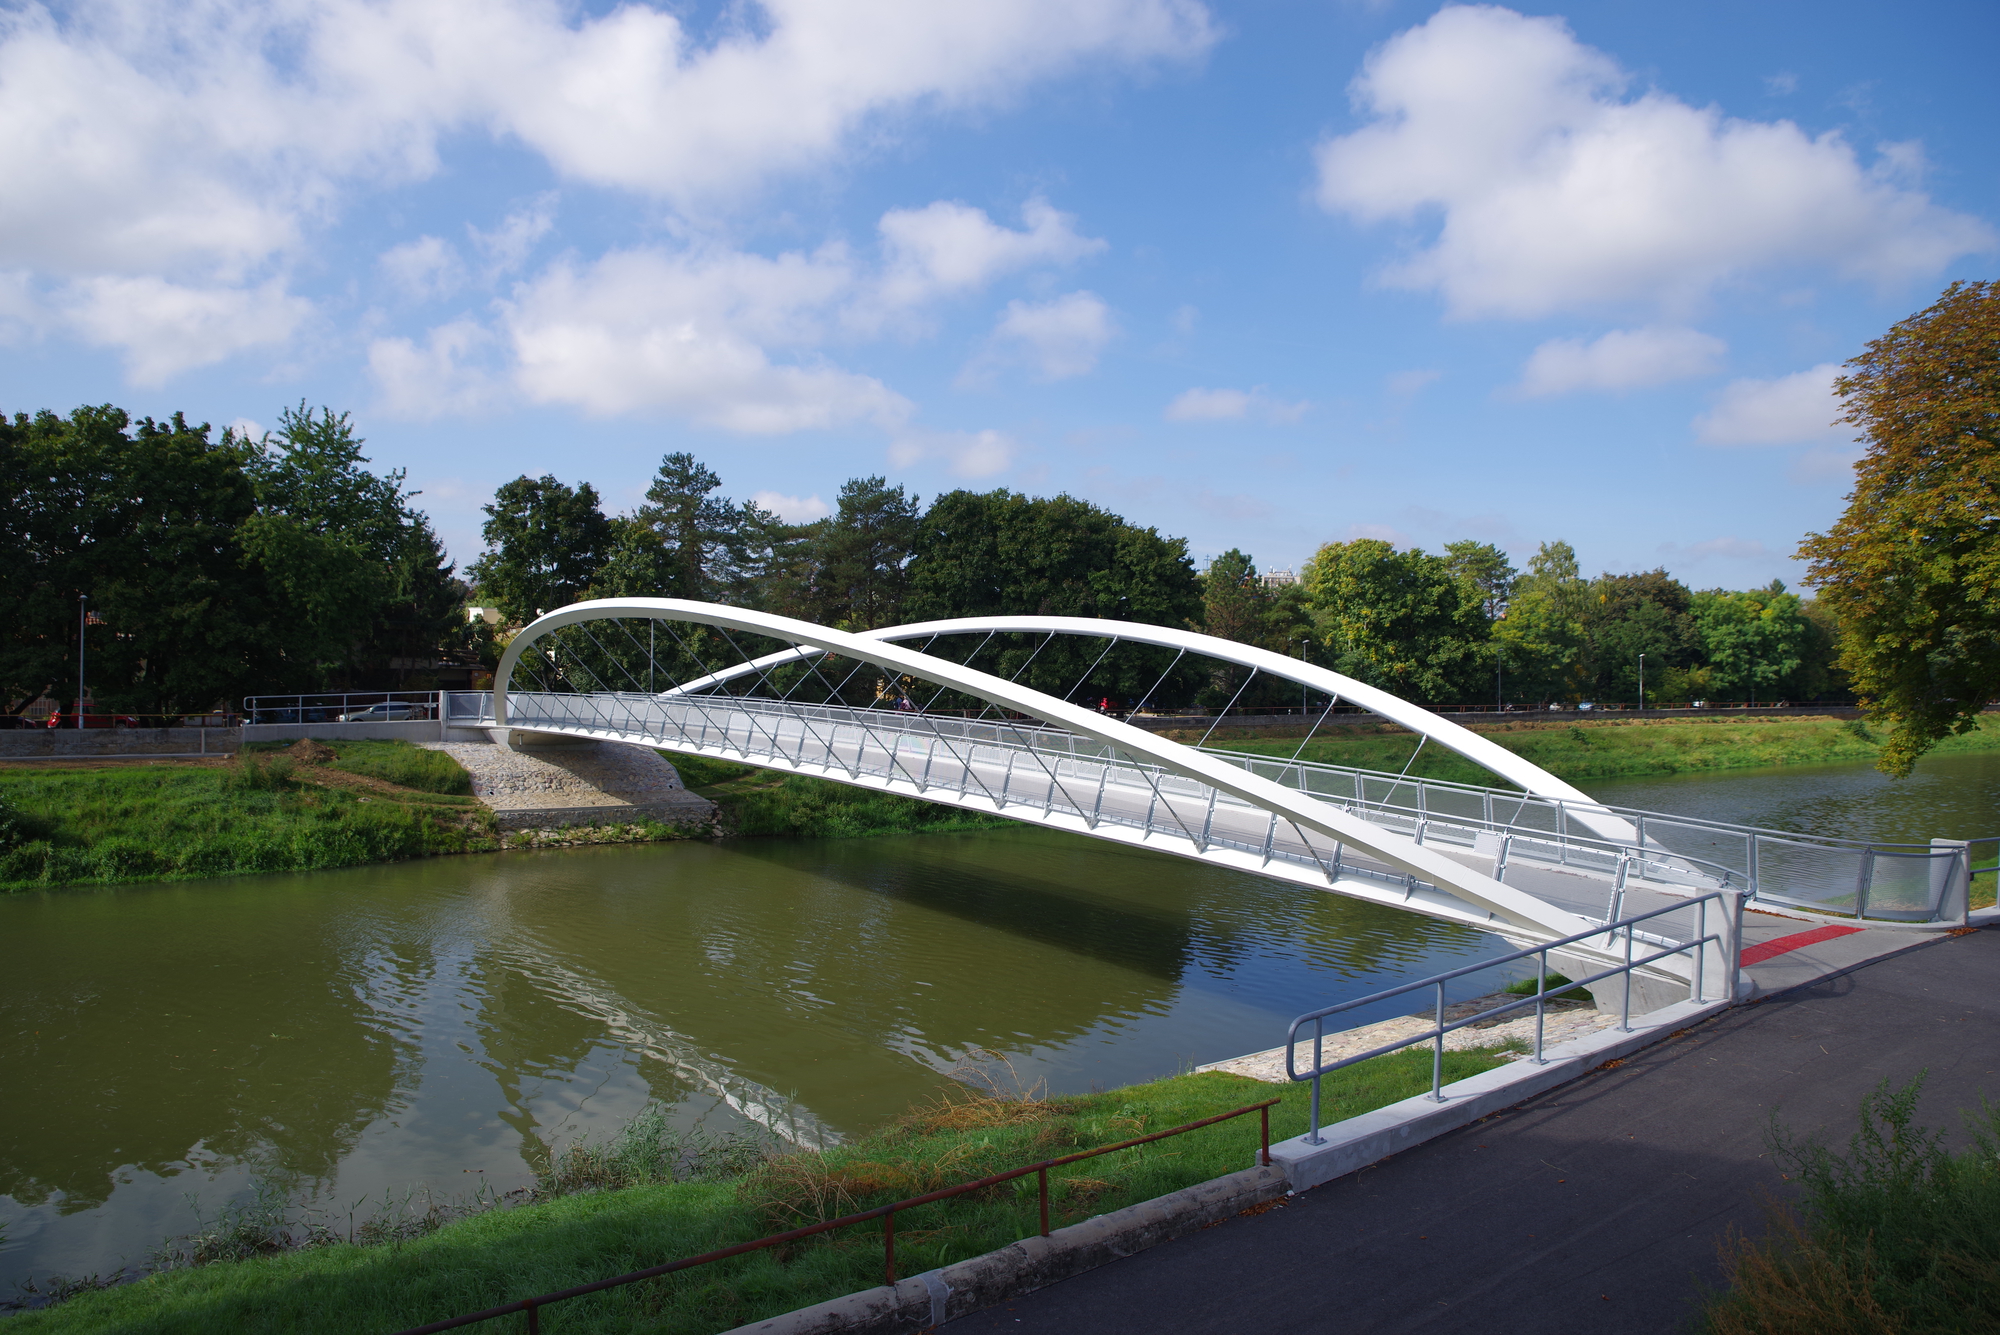  Kalvarsky Most - 横跨尼特拉河的自行车桥丨Kalvarsky Most - Cyclist Bridge across the River Nitra-14